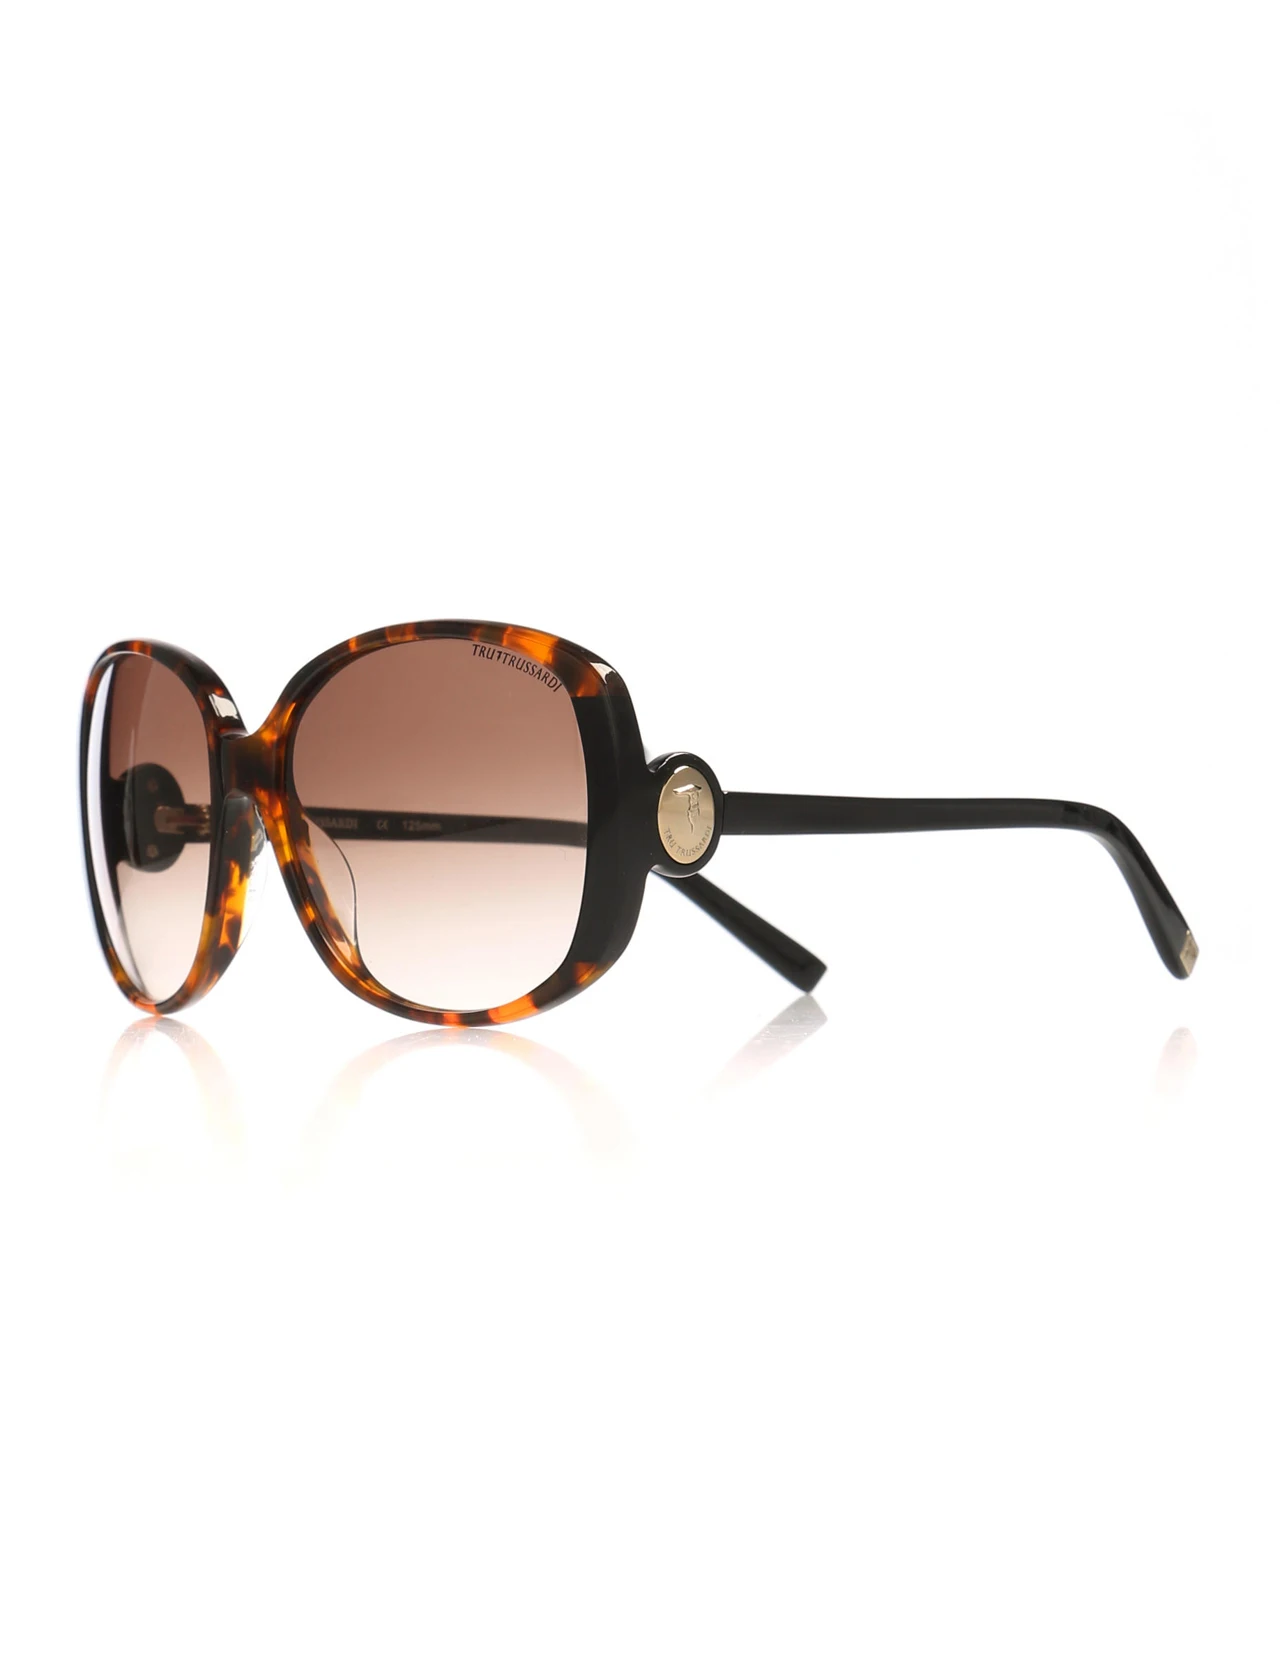 

Women's sunglasses trs 128 28 tt bone Brown organic oval square 58-16-125 trussardi